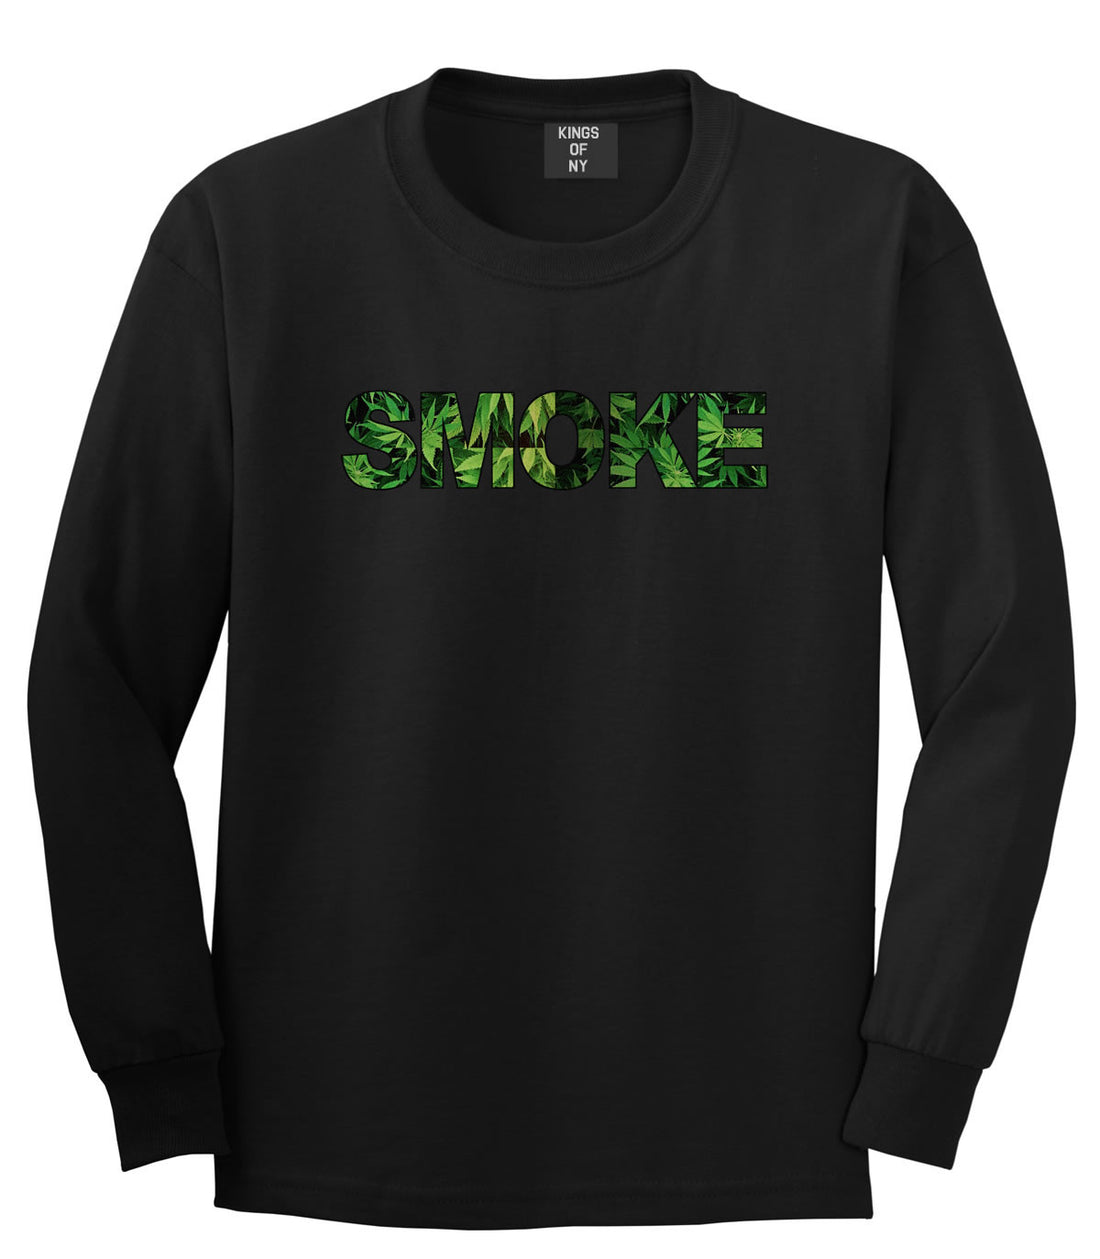 Smoke Weed Marijuana Print Boys Kids Long Sleeve T-Shirt in Black by Kings Of NY